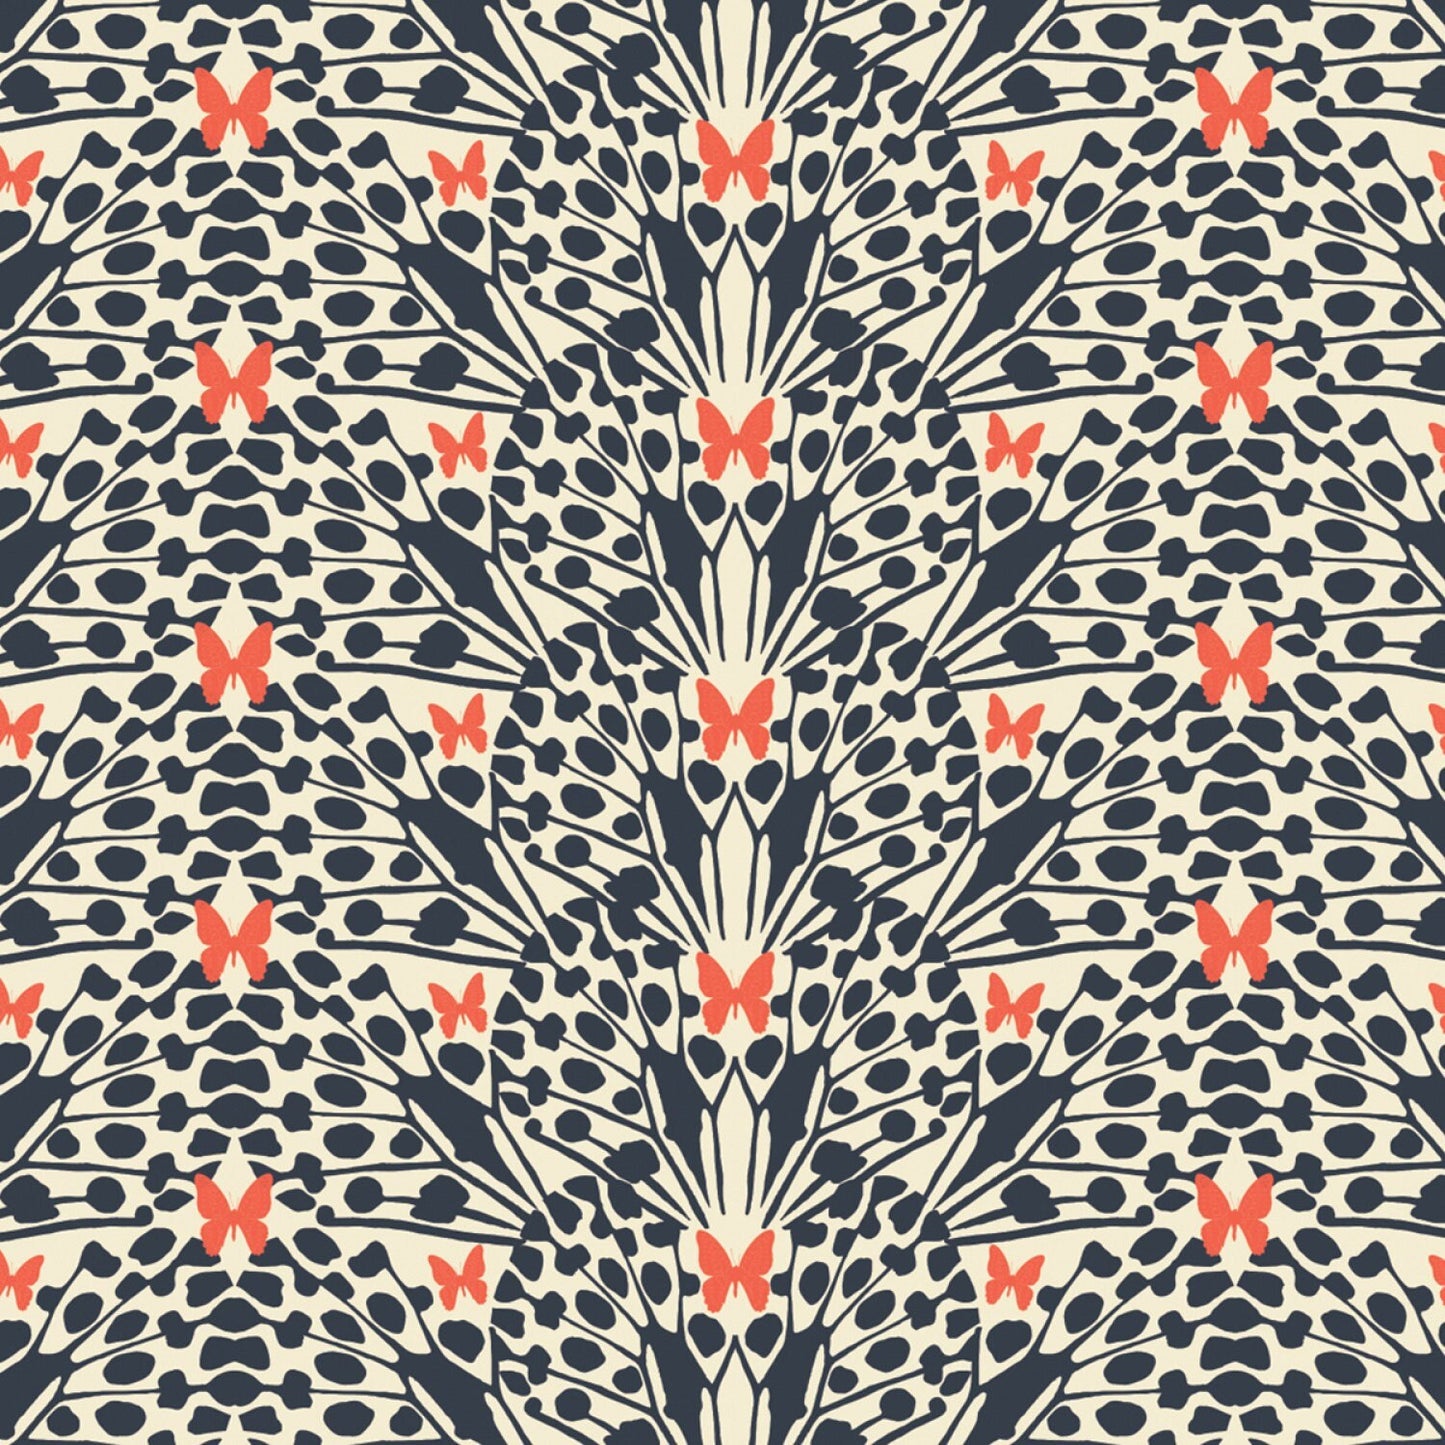 Monarch Grove by Sara B Kaleidoscope in Blue Nights 26170504-1 Digitally Printed Cotton Woven Fabric